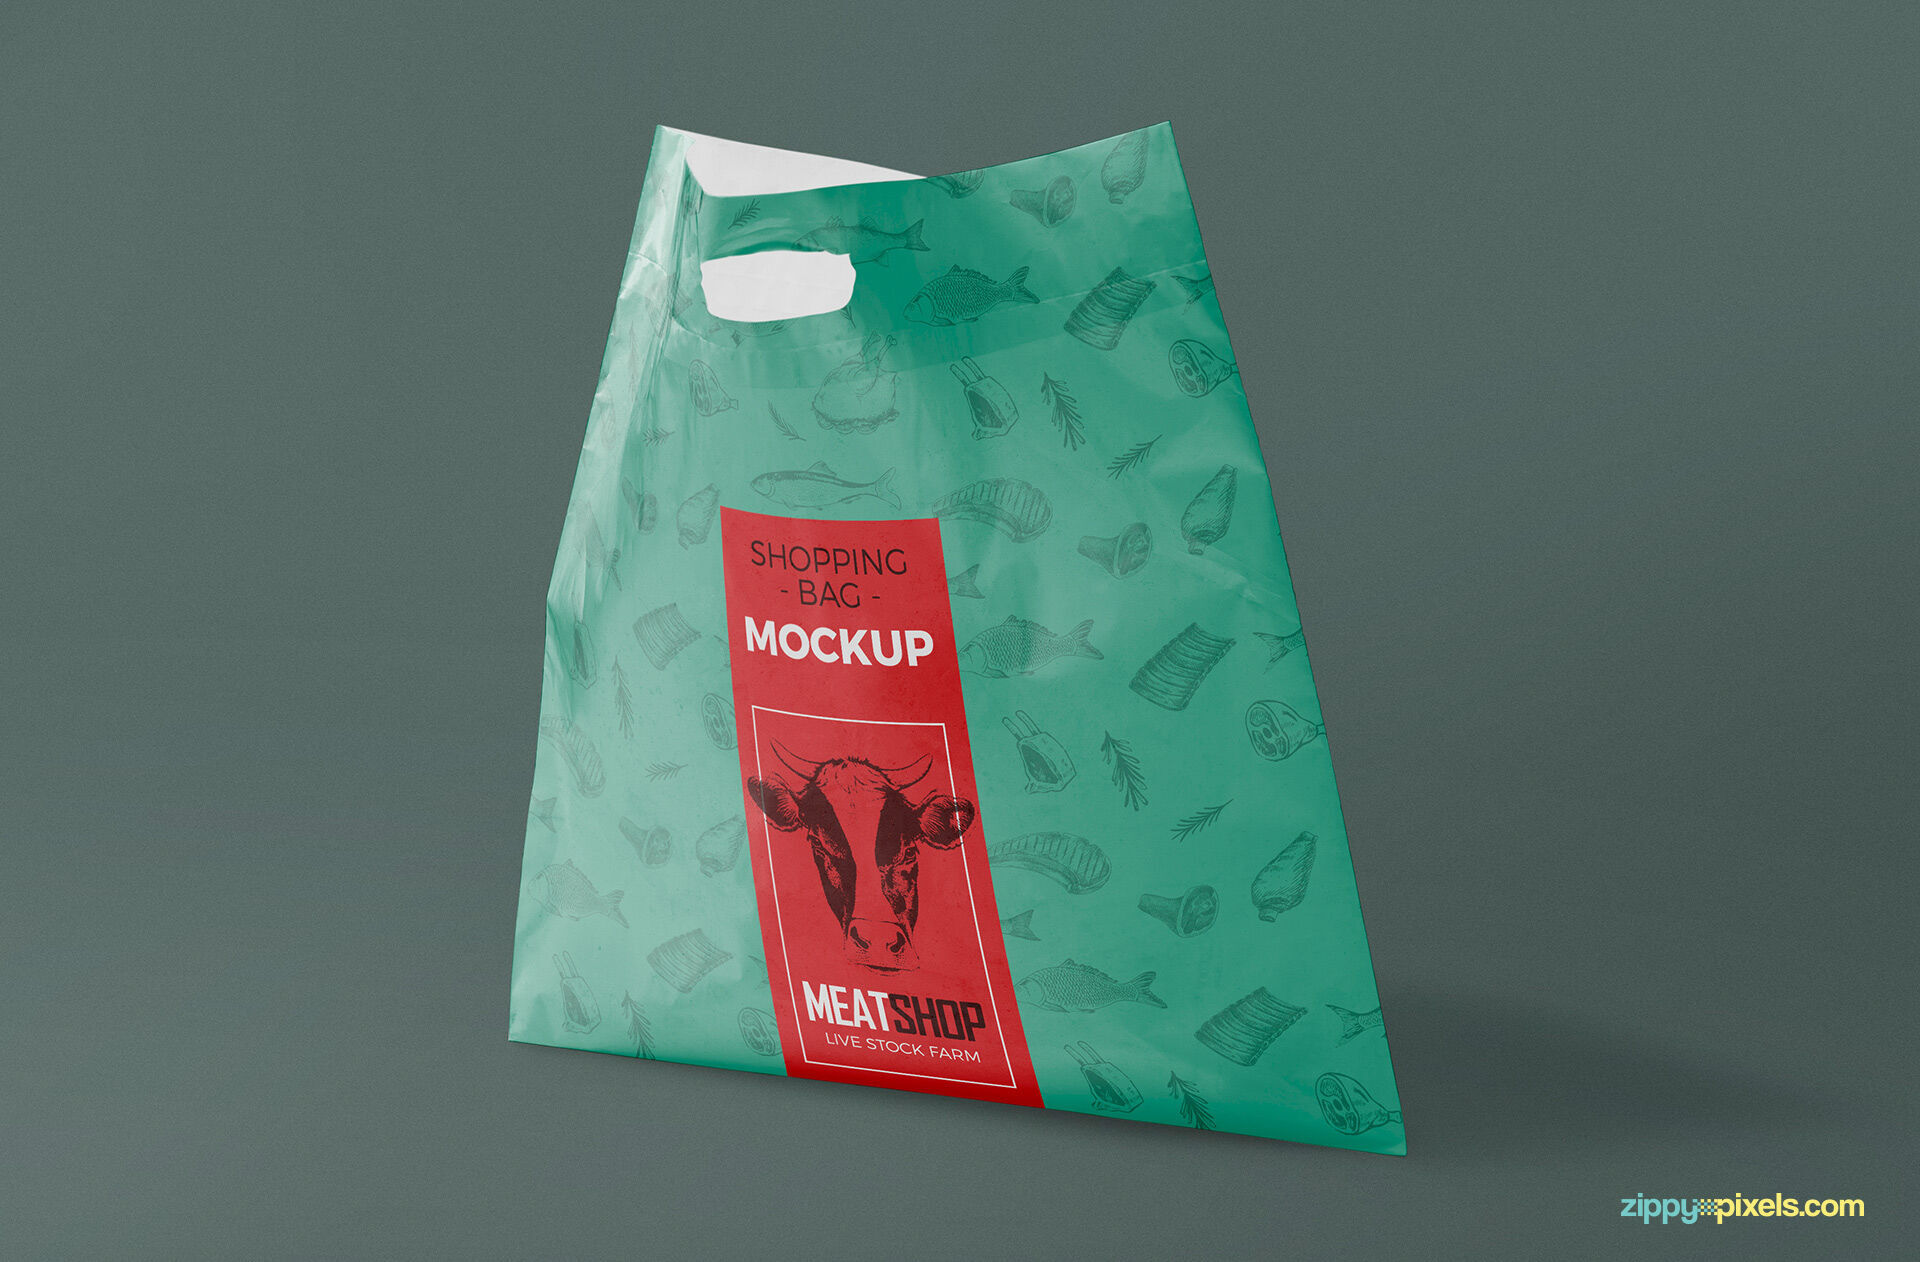 Standing Plastic Bag Mockup FREE PSD